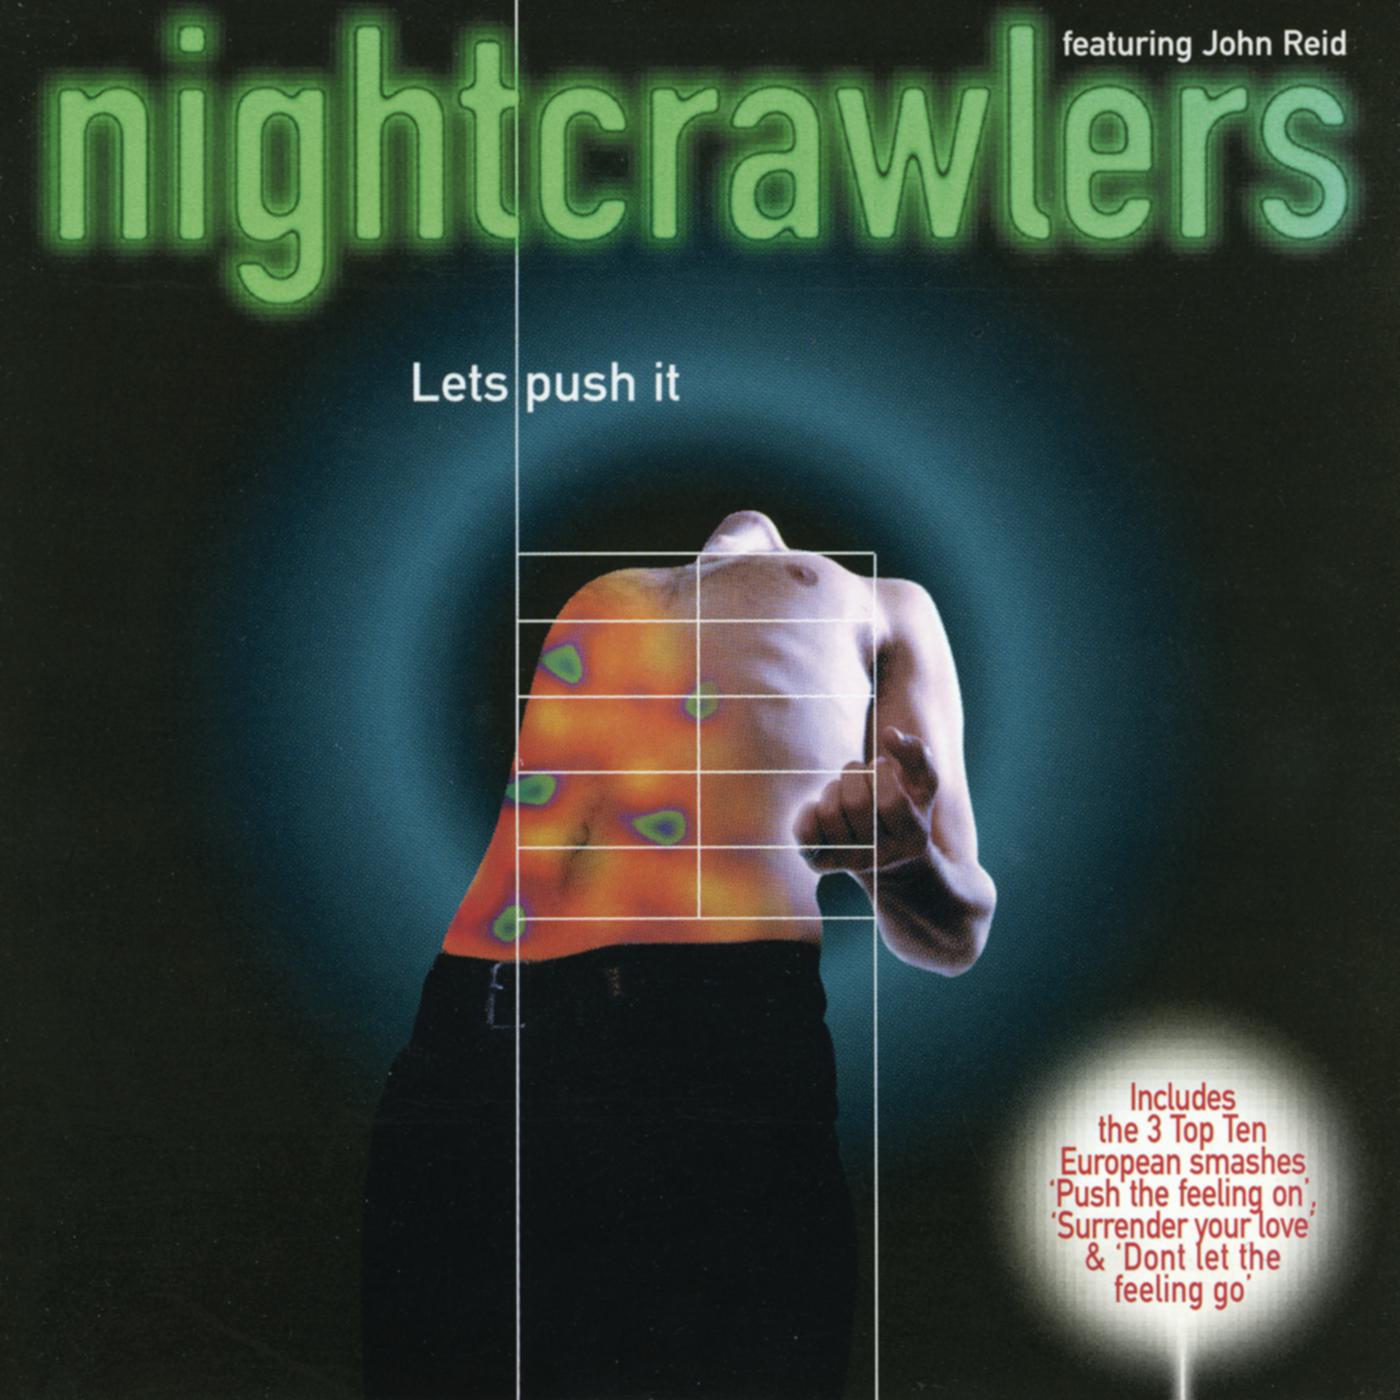 Nightcrawlers push the feeling on